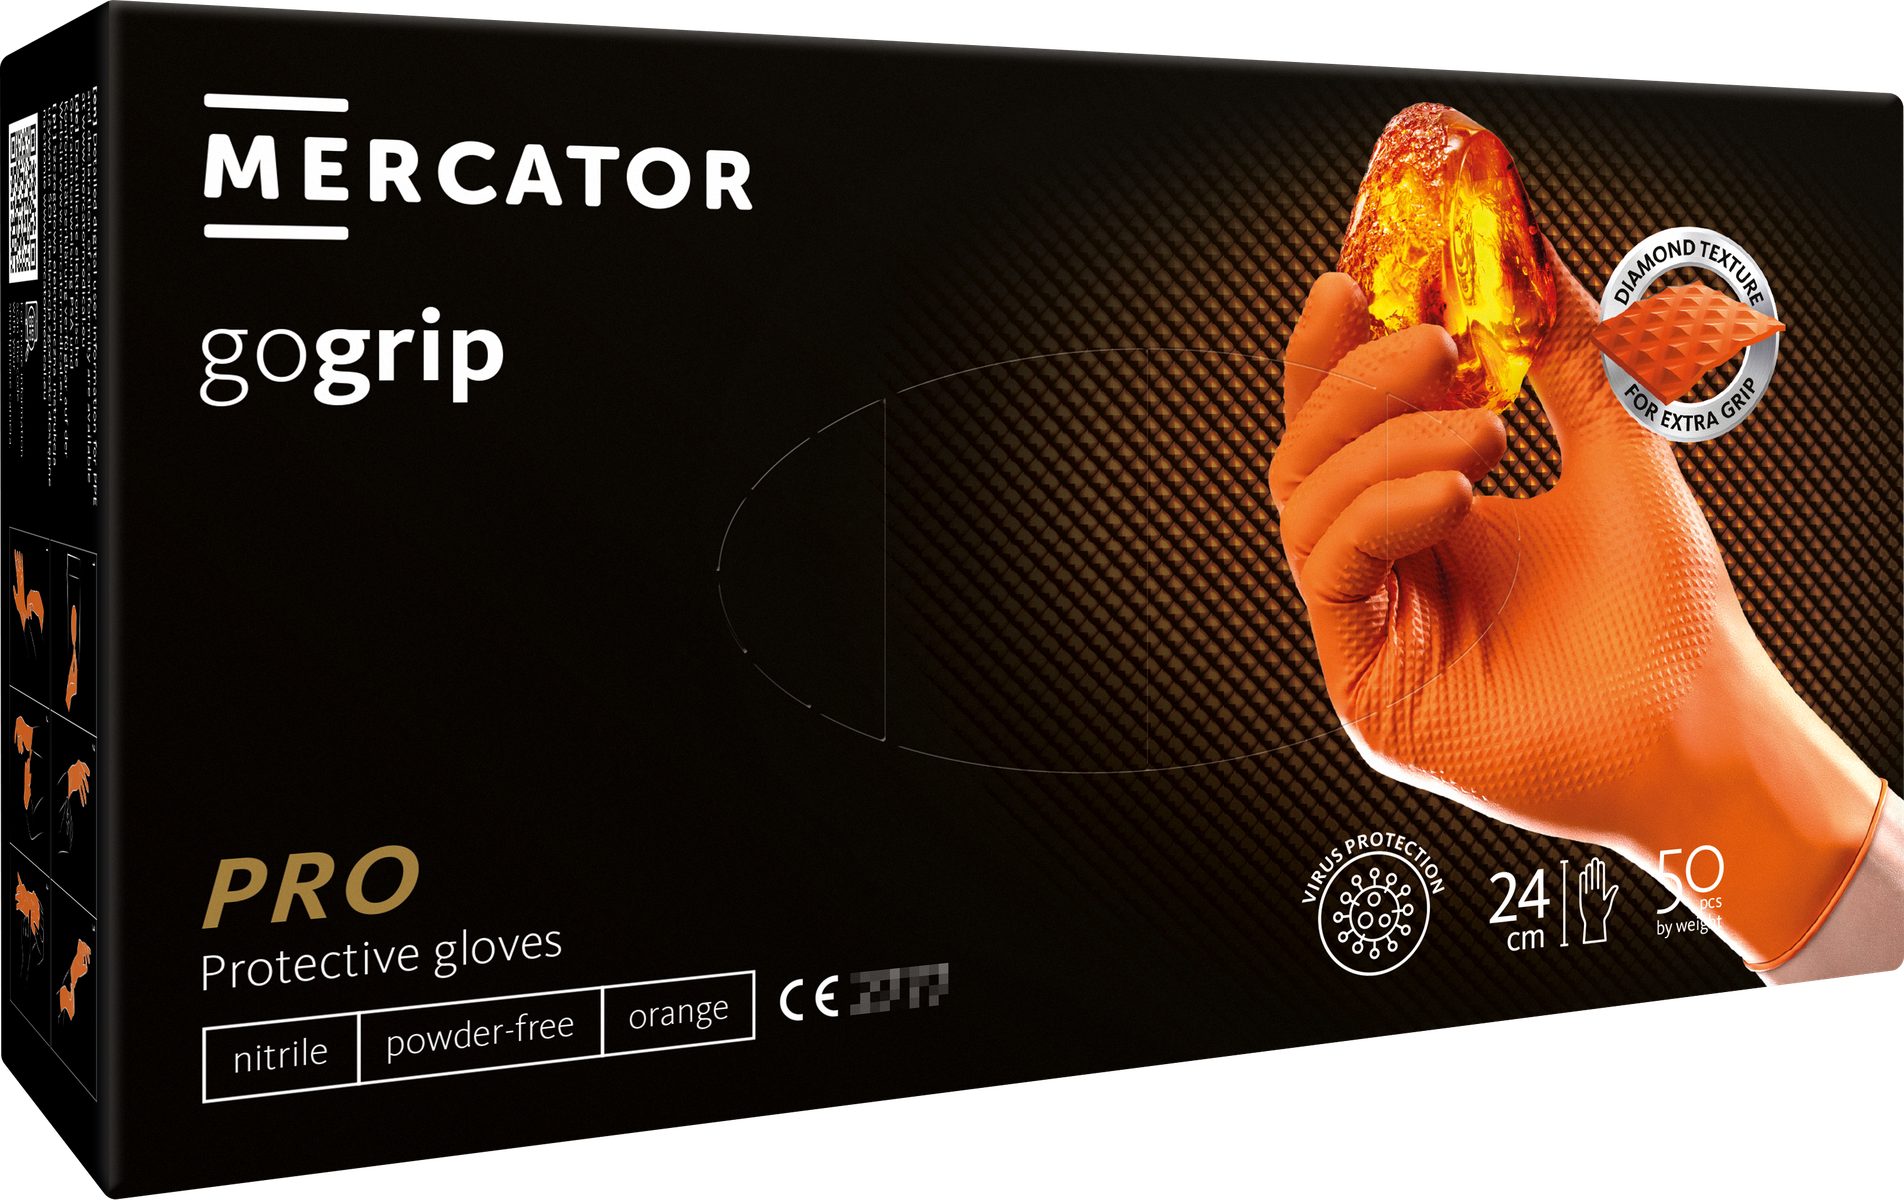 MERCATOR MEDICAL Einweghandschuhe MERCATOR gogrip black Orange | Handschuhe